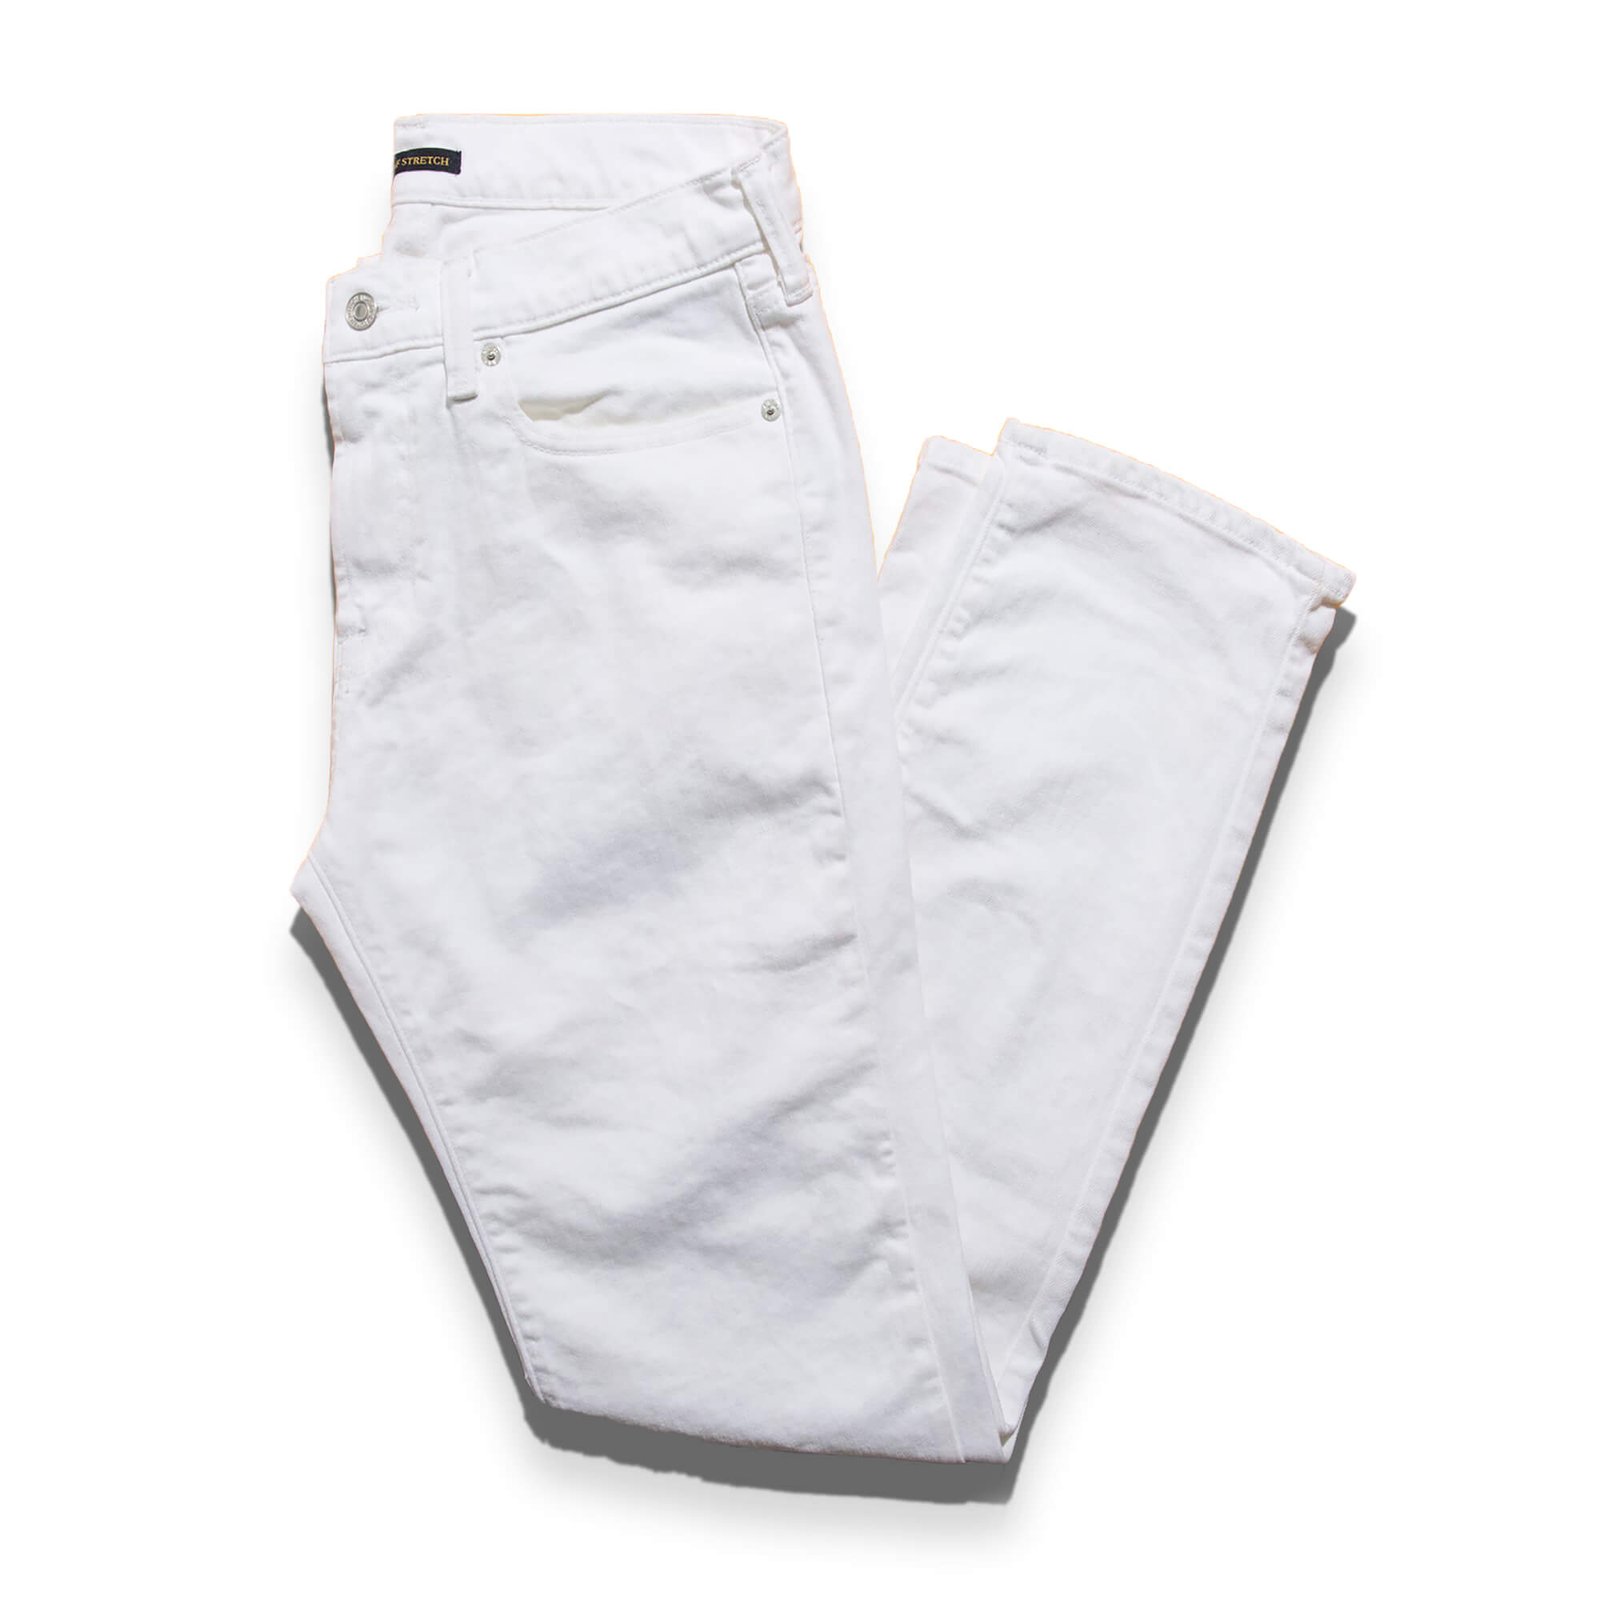 Blank Free Jeans Pants Mockup PSD Template